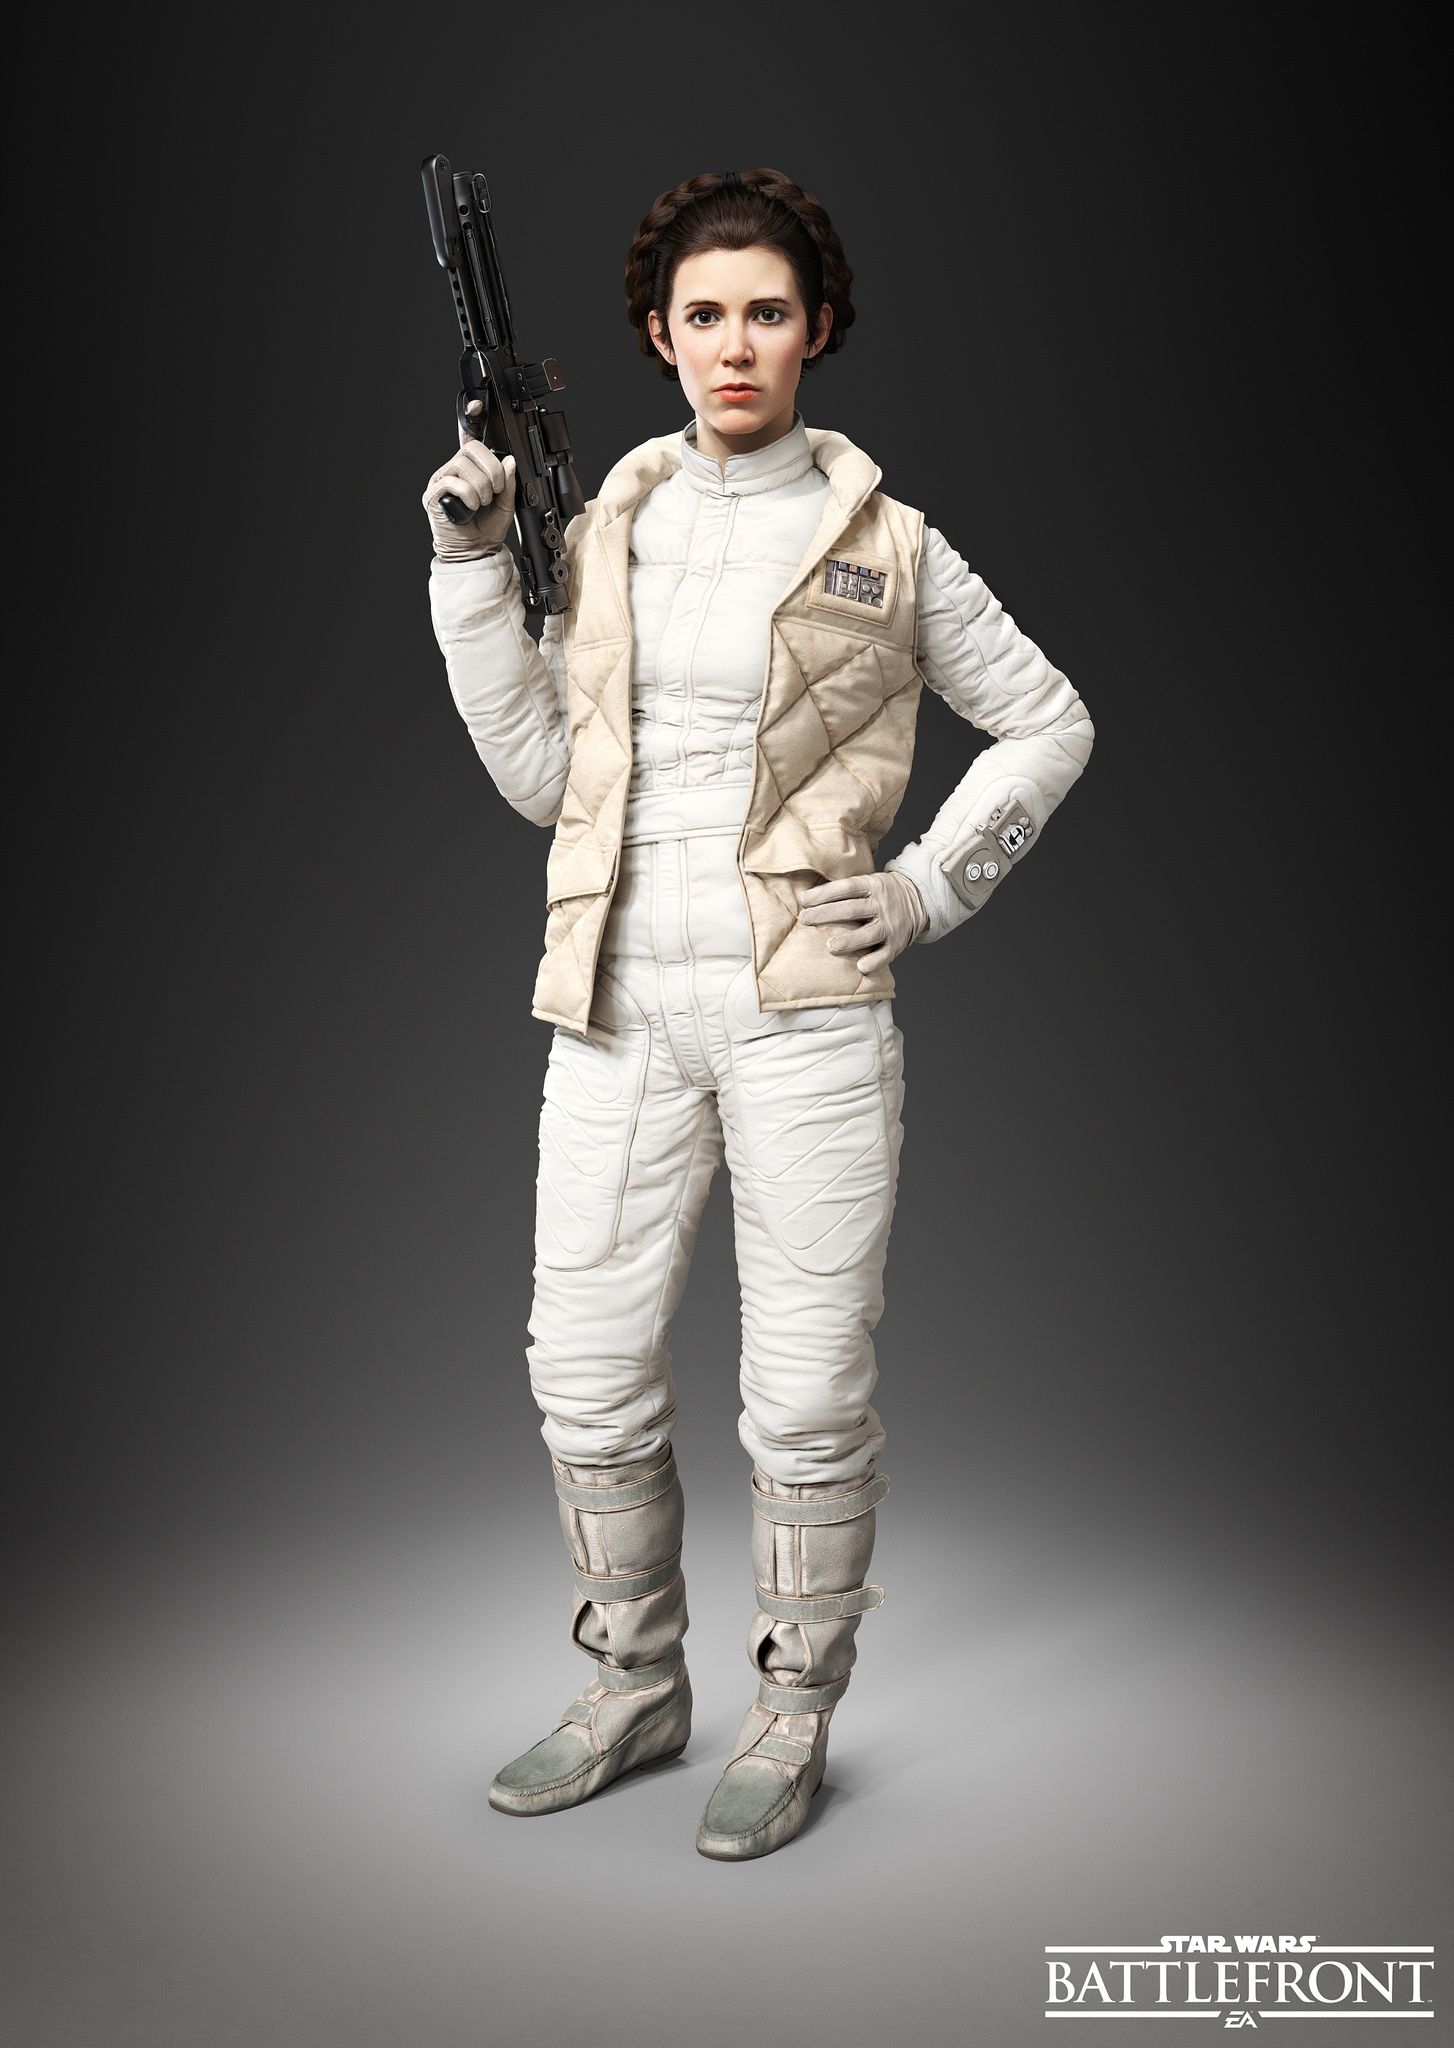 Star Wars Battlefront Princess Leia Photo